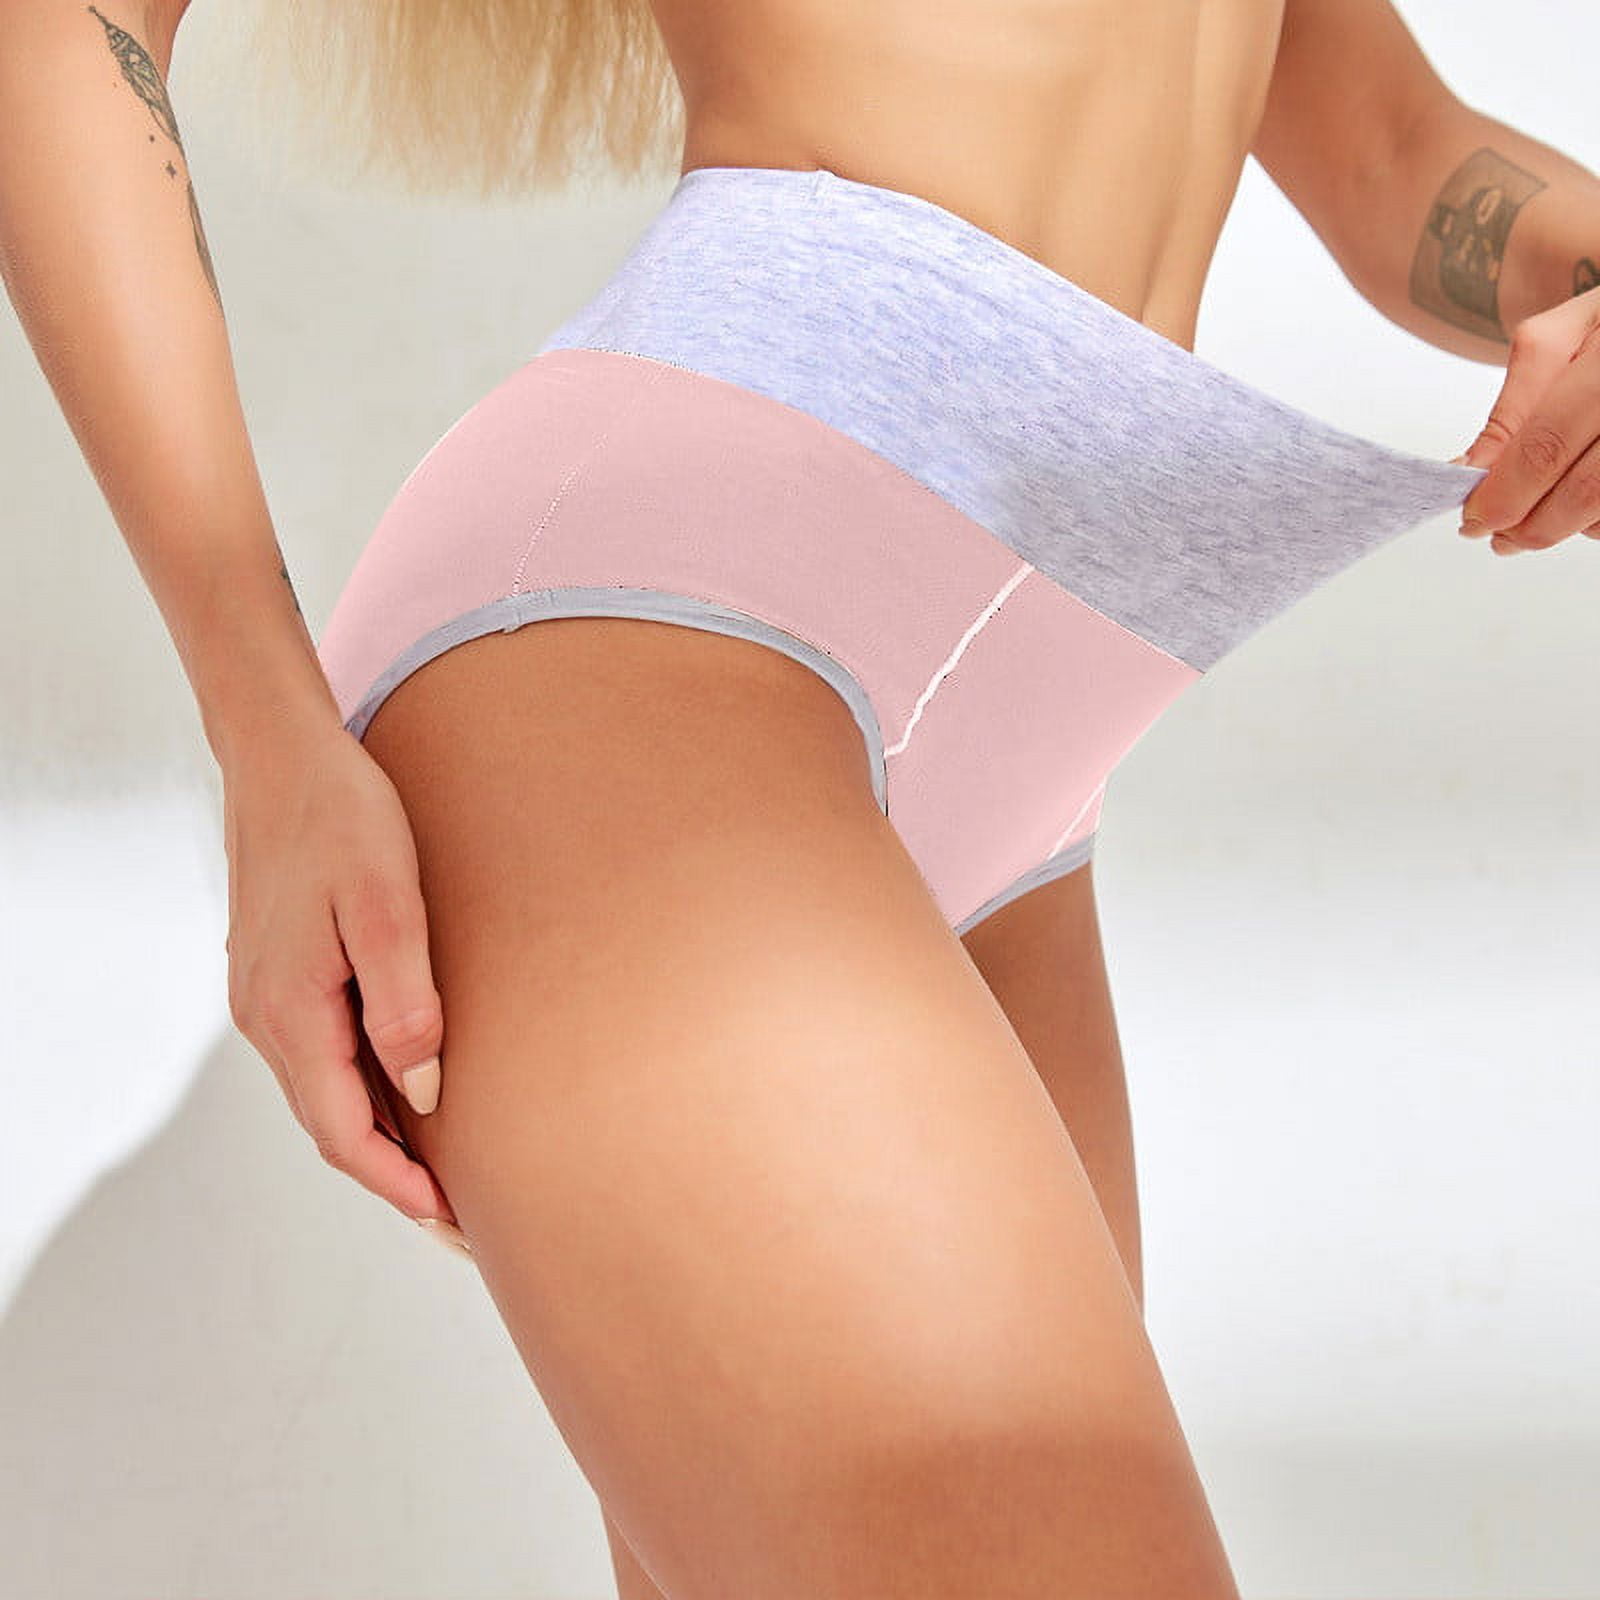 Women's Underwear,Seamless High Waist Cotton Briefs-Soft Stretchy Maternity  & Menstrual Protection Underwear-Plus Size Female Panties,for Tummy